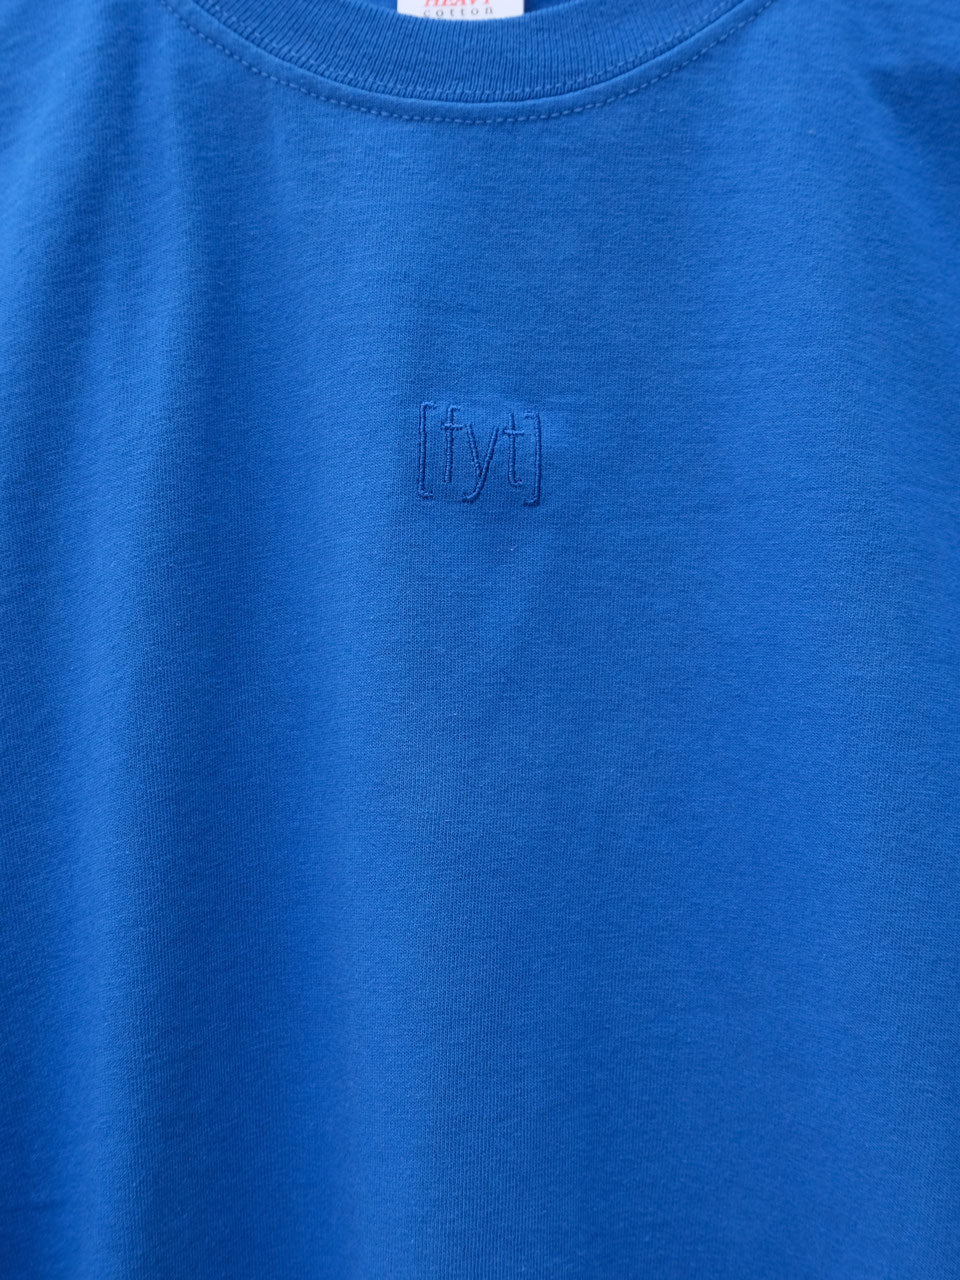 FYT Logo T-shirt blau